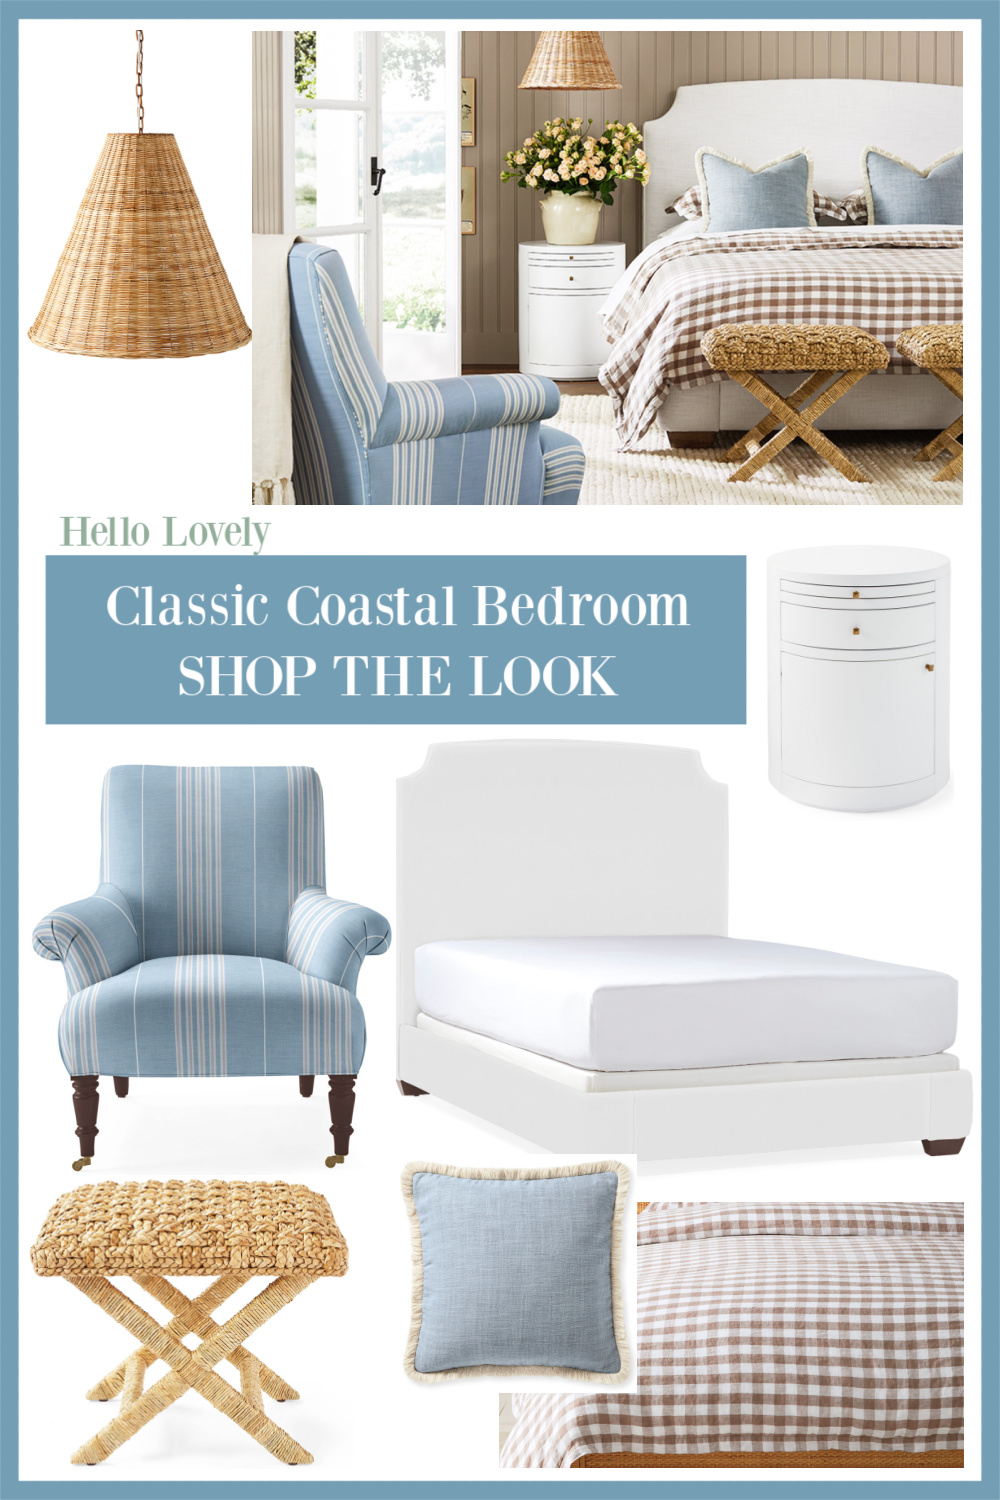 Classic coastal bedroom shop the look on Hello Lovely Studio